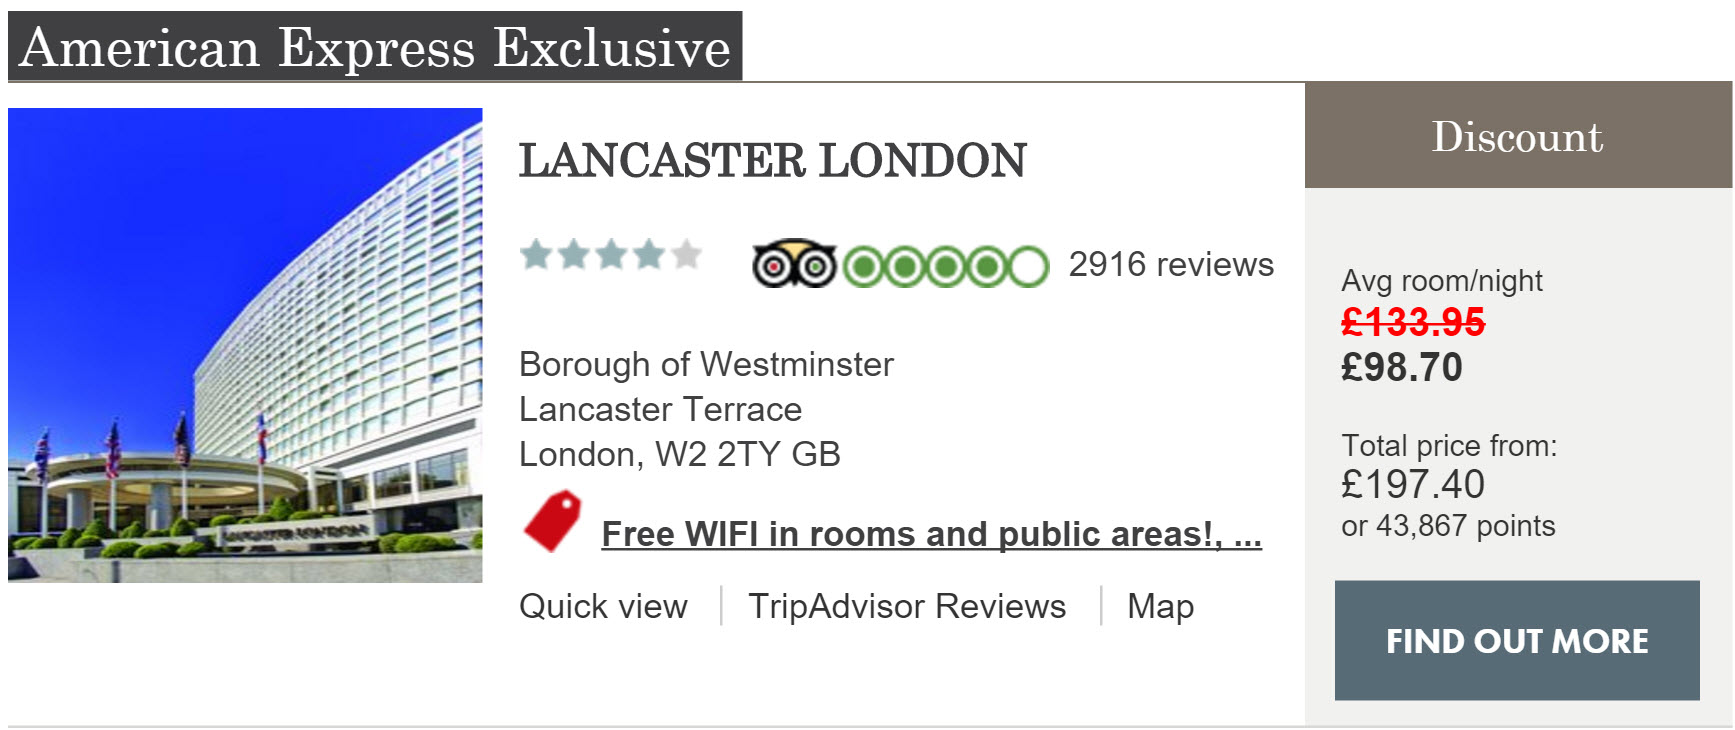 amex-travel-lancaster-london